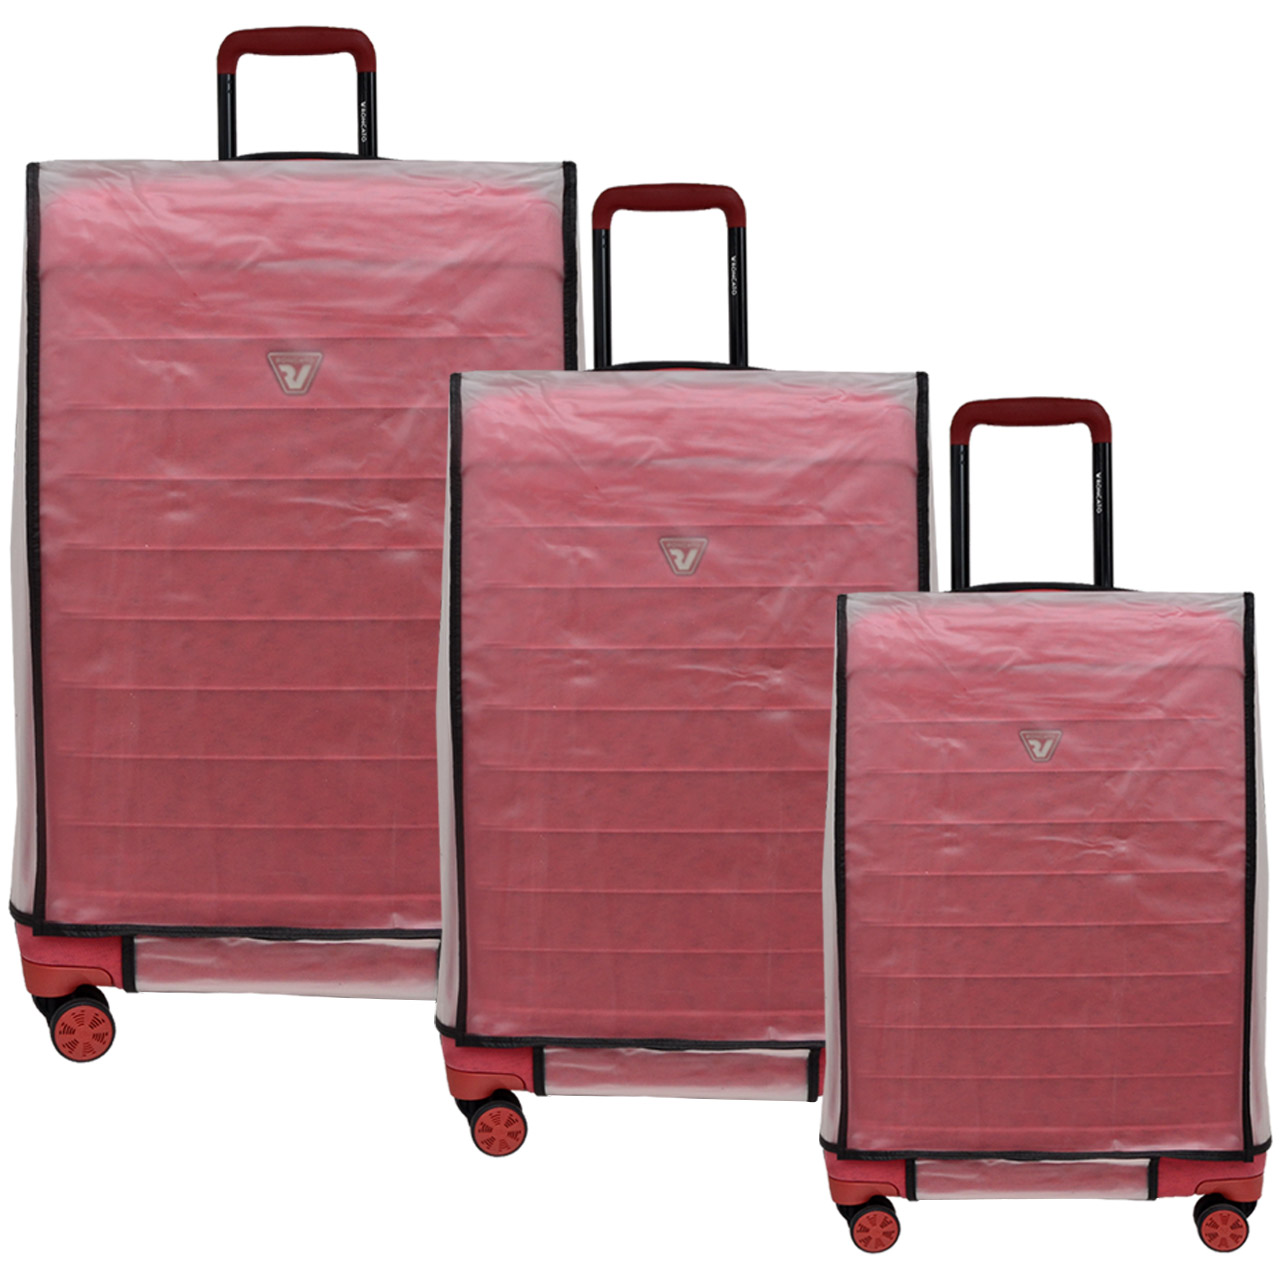 کاور چمدان مدل GLASS 2300047 MT مجموعه 3 عددی| خرید لوازم سفر